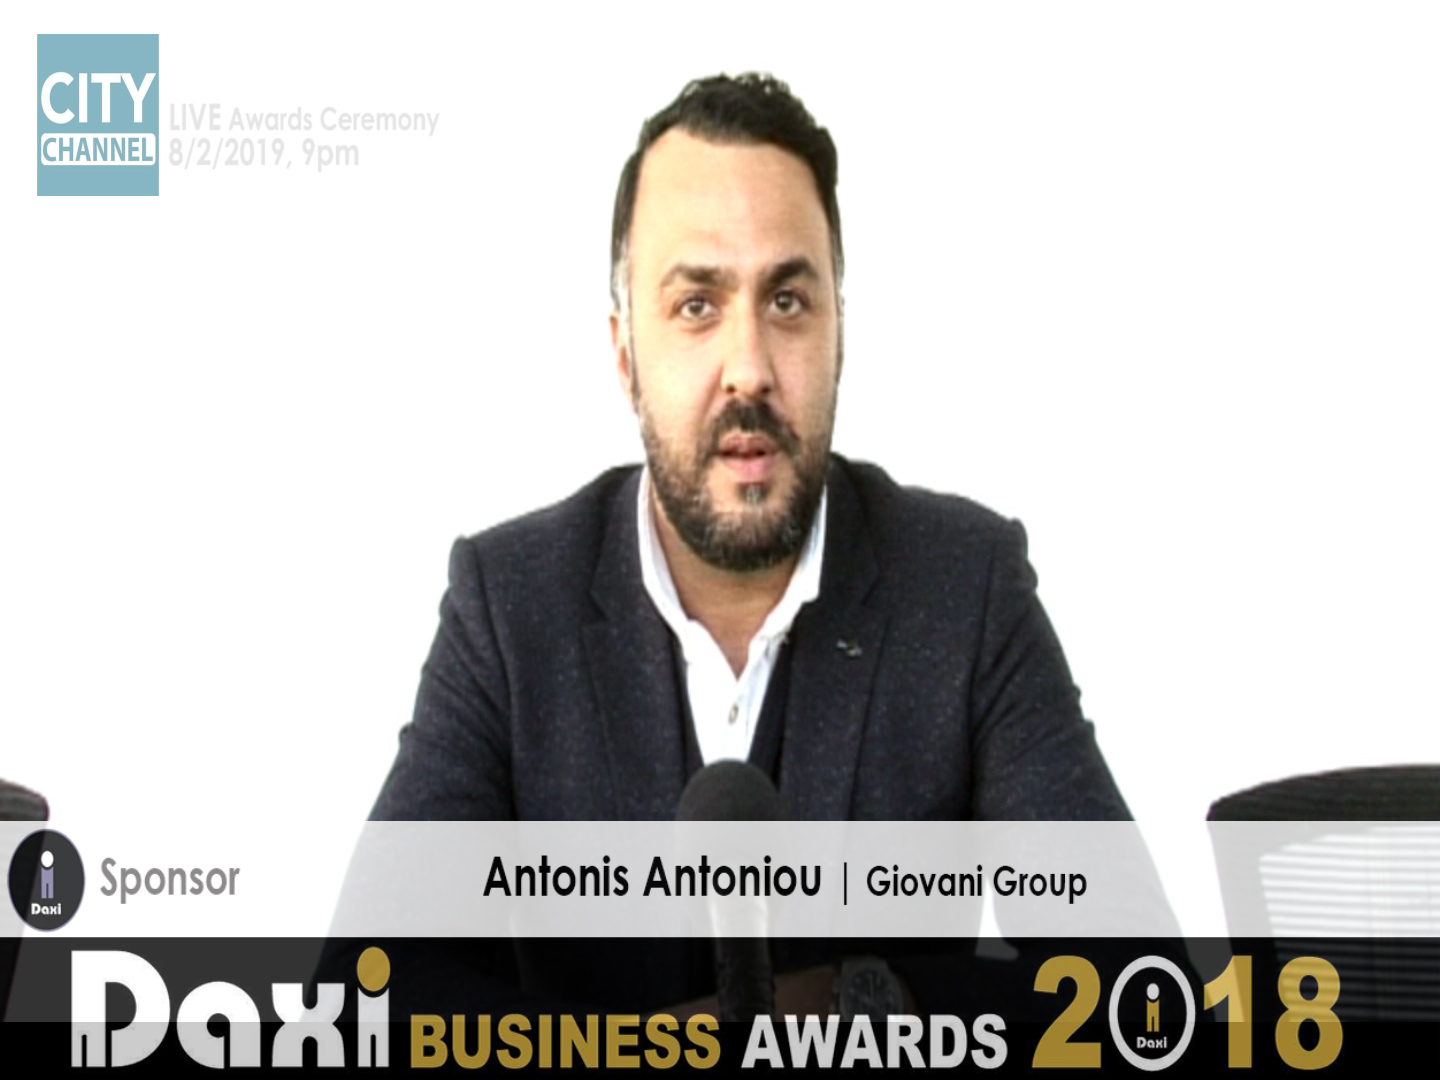 DAXI AWARDS Antonis Antoniou  Executive Director The Giovani Group